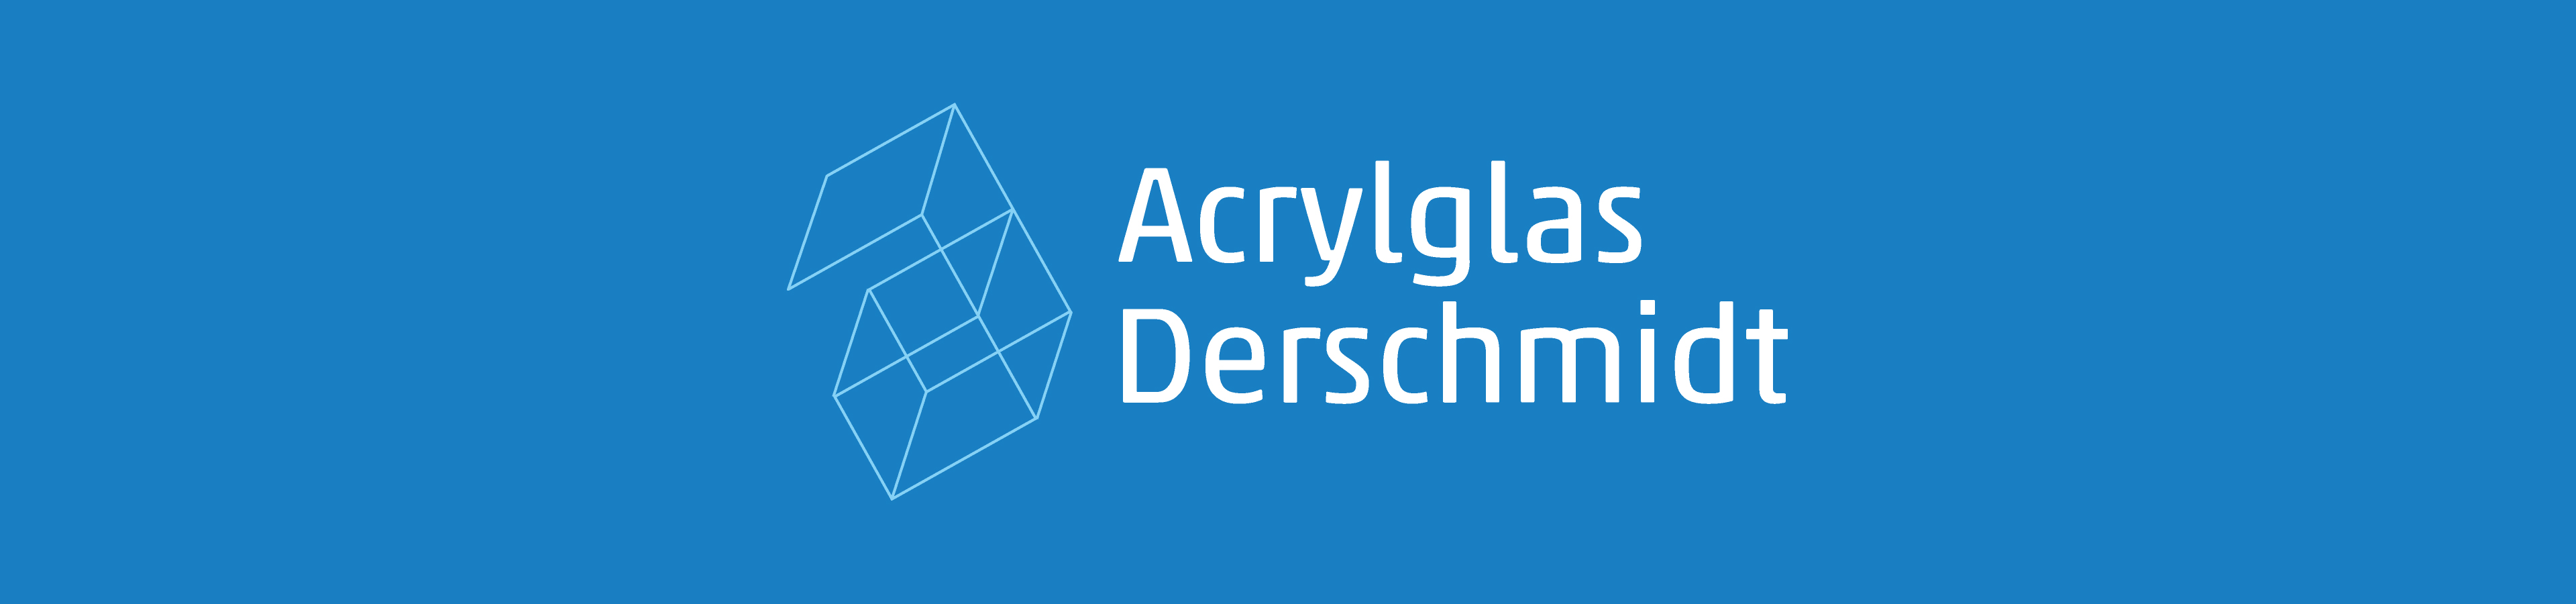 Acrylglas derschmidt - Logo